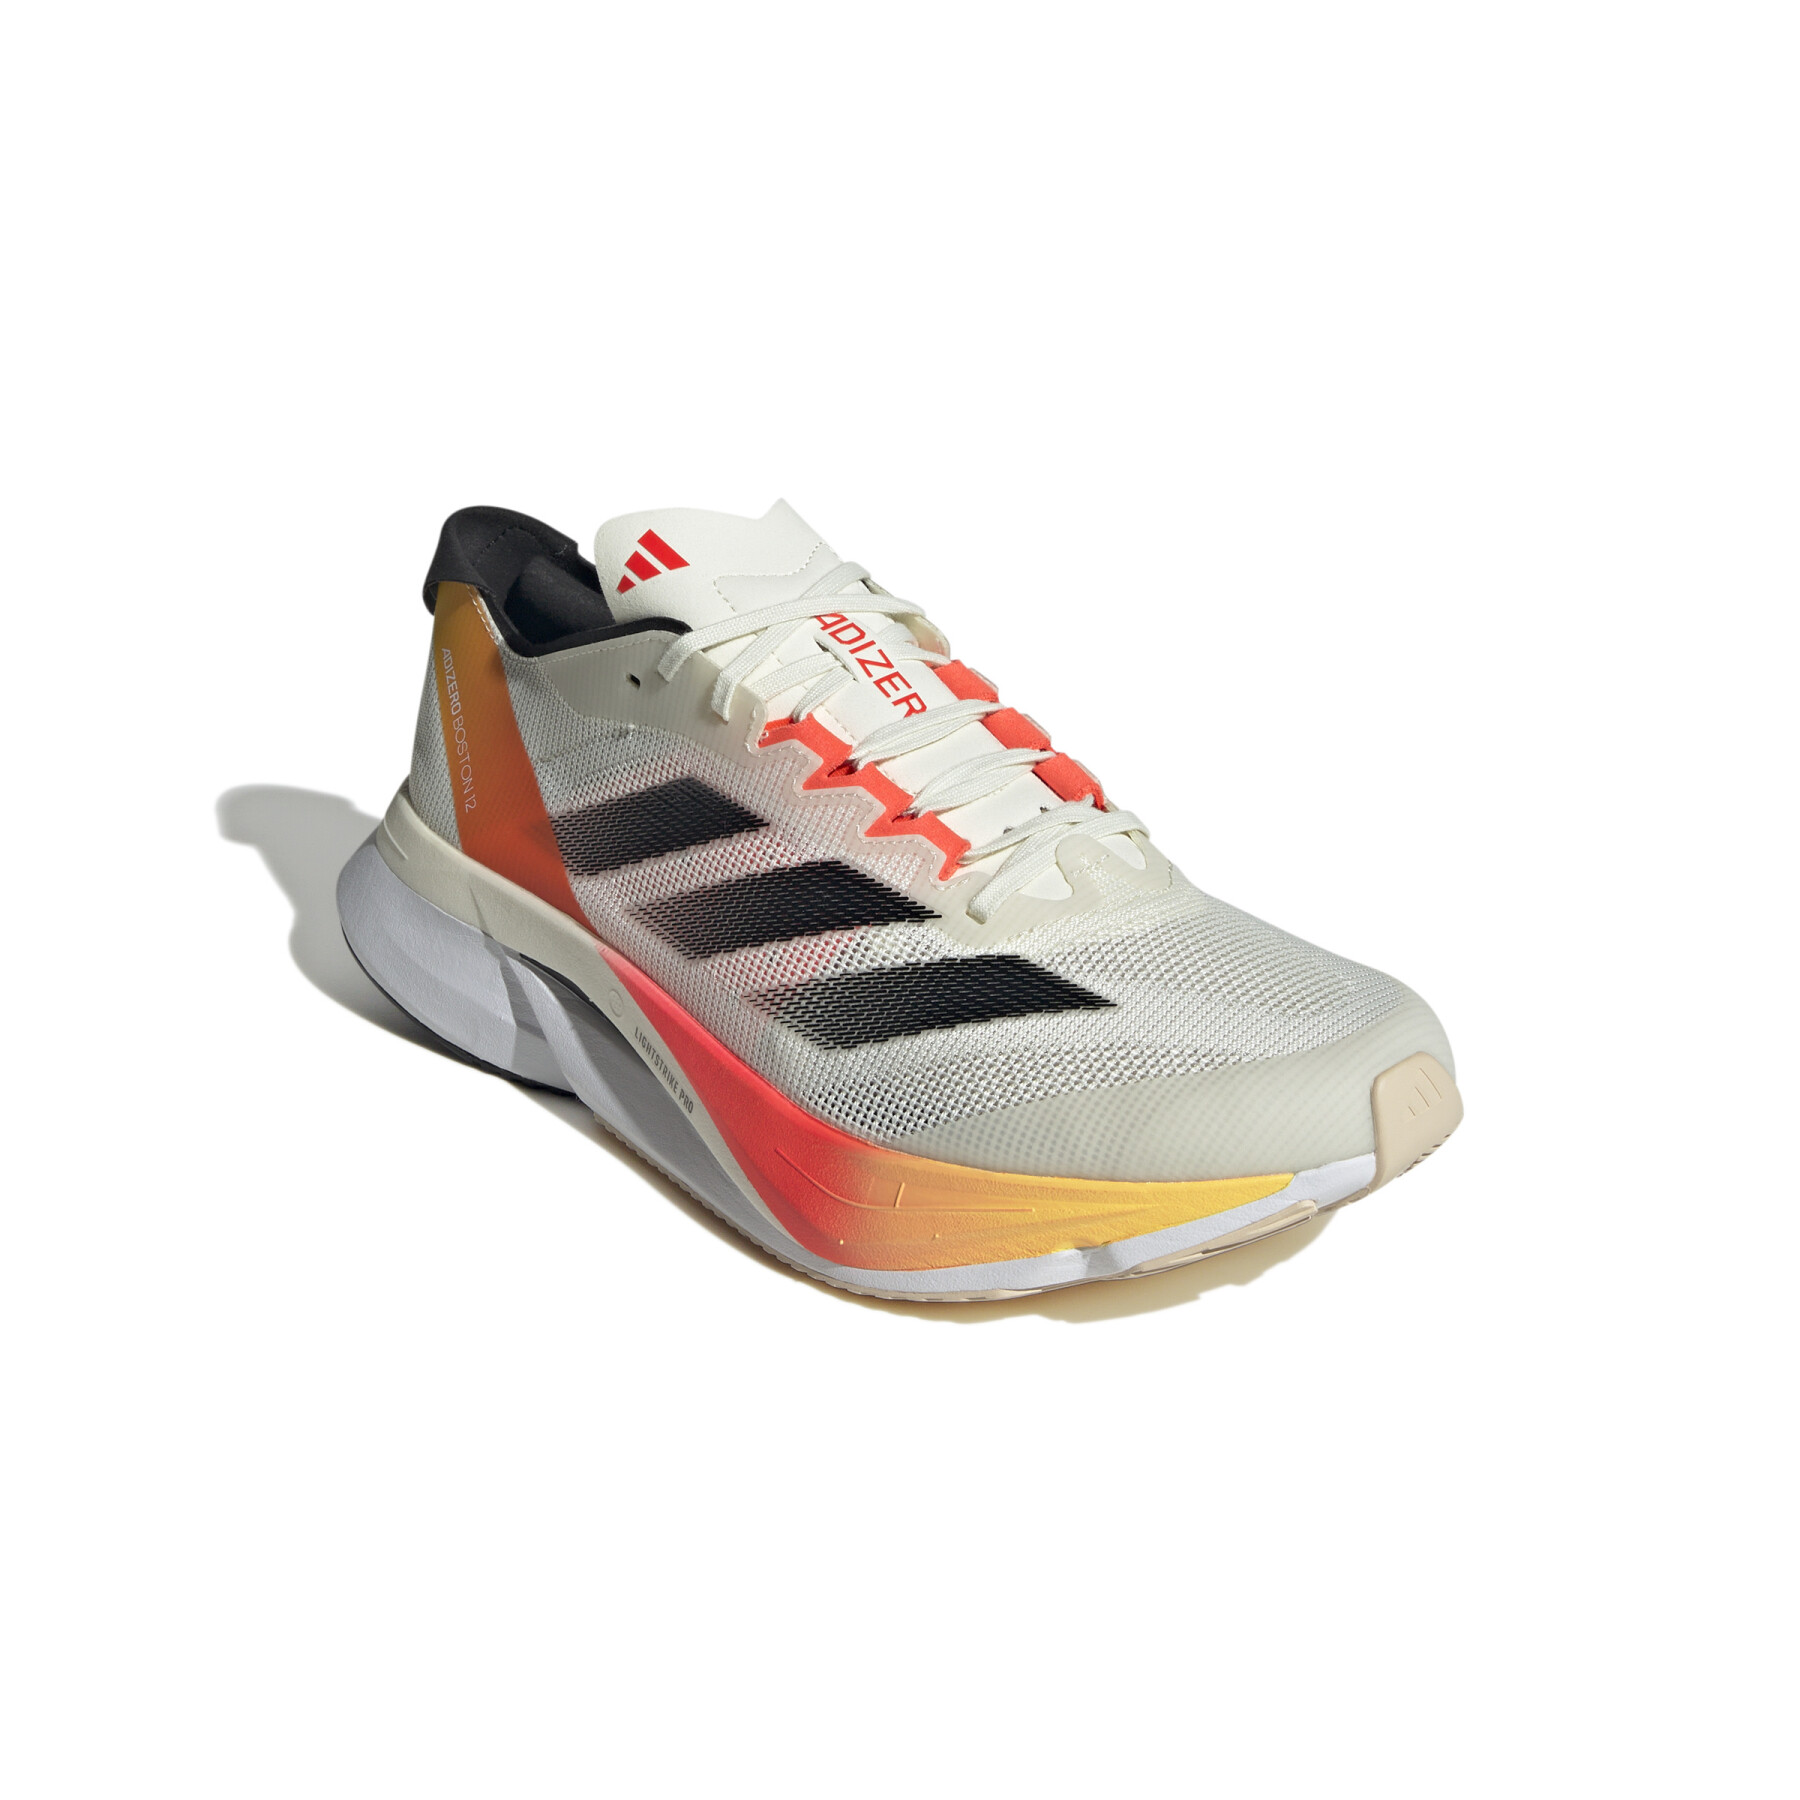 Chaussures de running adidas Adizero Boston 12